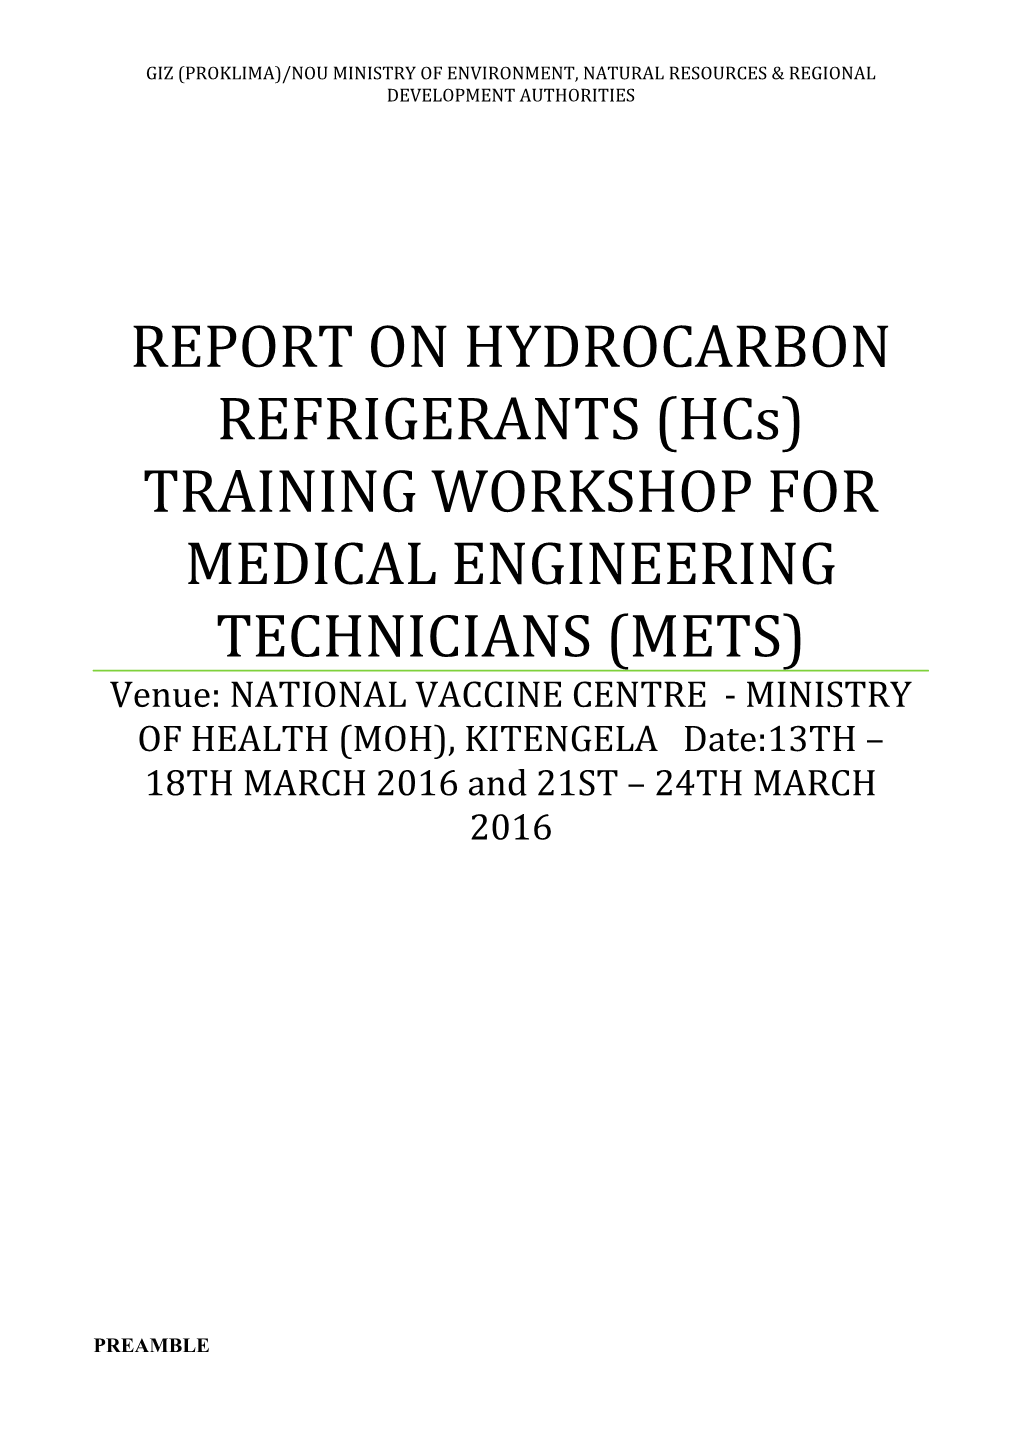 REPORT on HYDROCARBON REFRIGERANTS (Hcs) TRAINING WORKSHOP for MEDICAL ENGINEERING TECHNICIANS